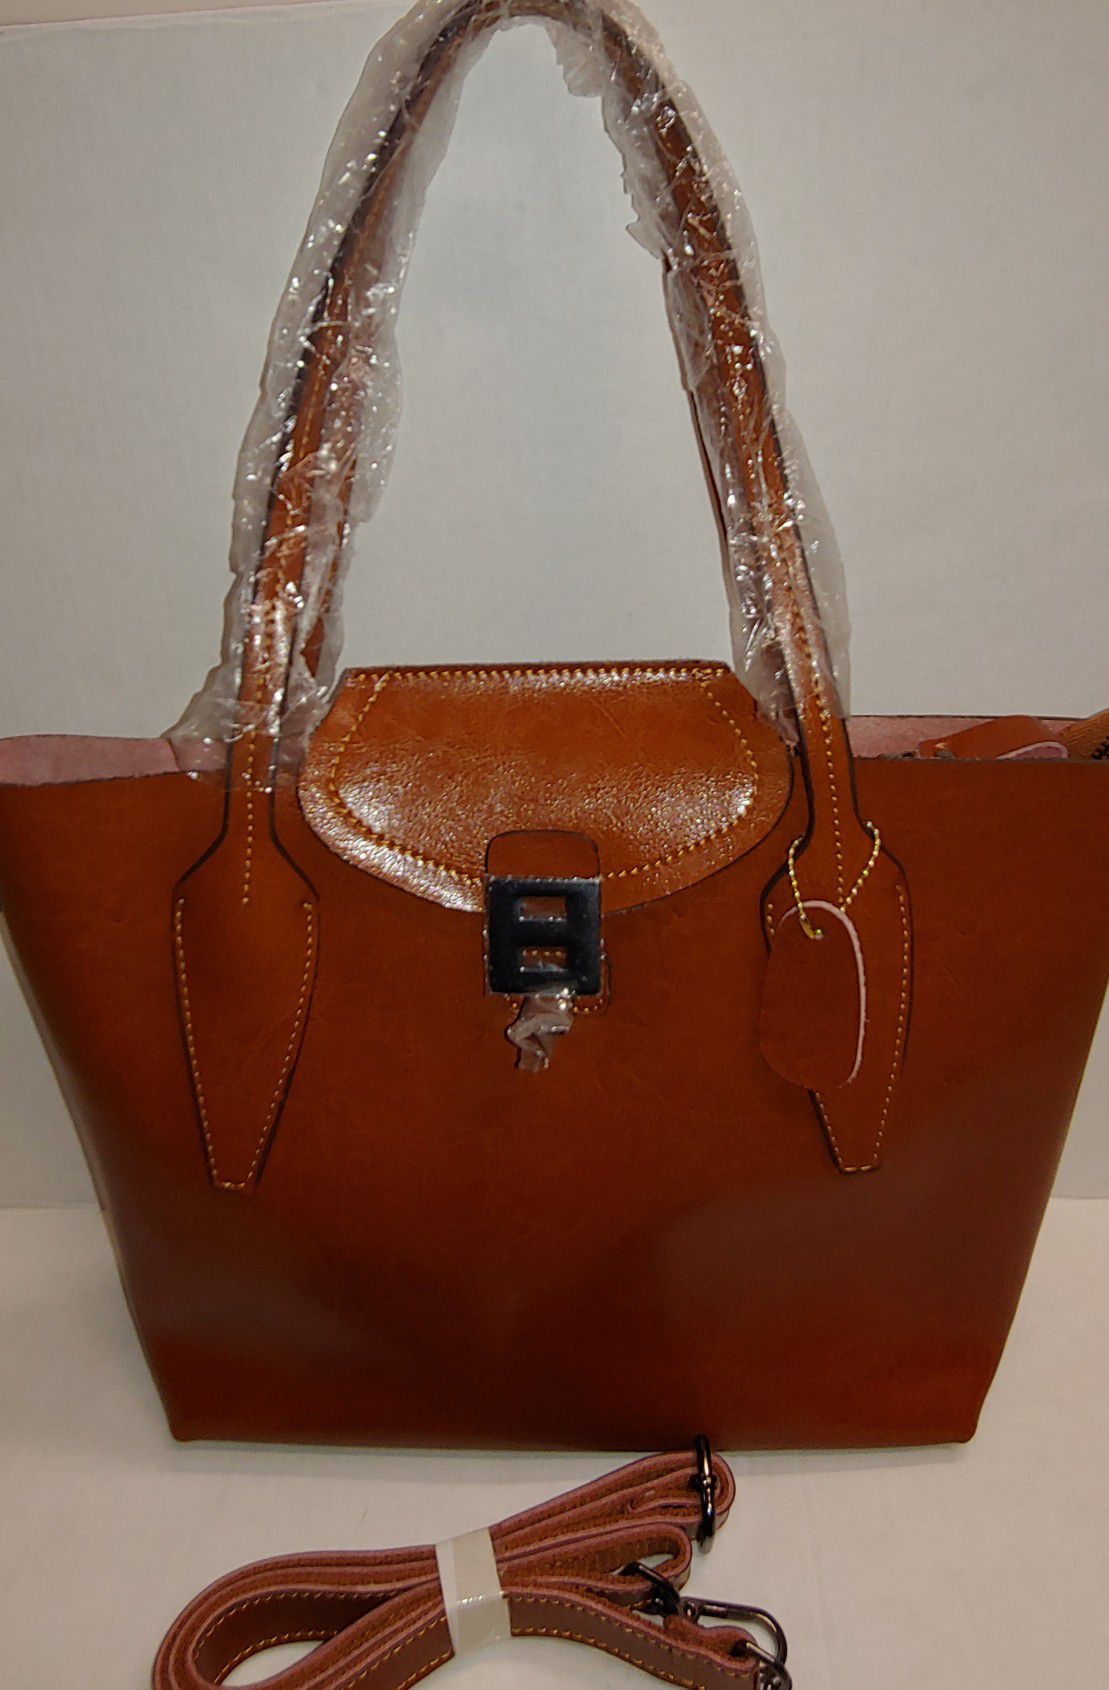 Genuine Leather new LaLo & Company brown tote purse